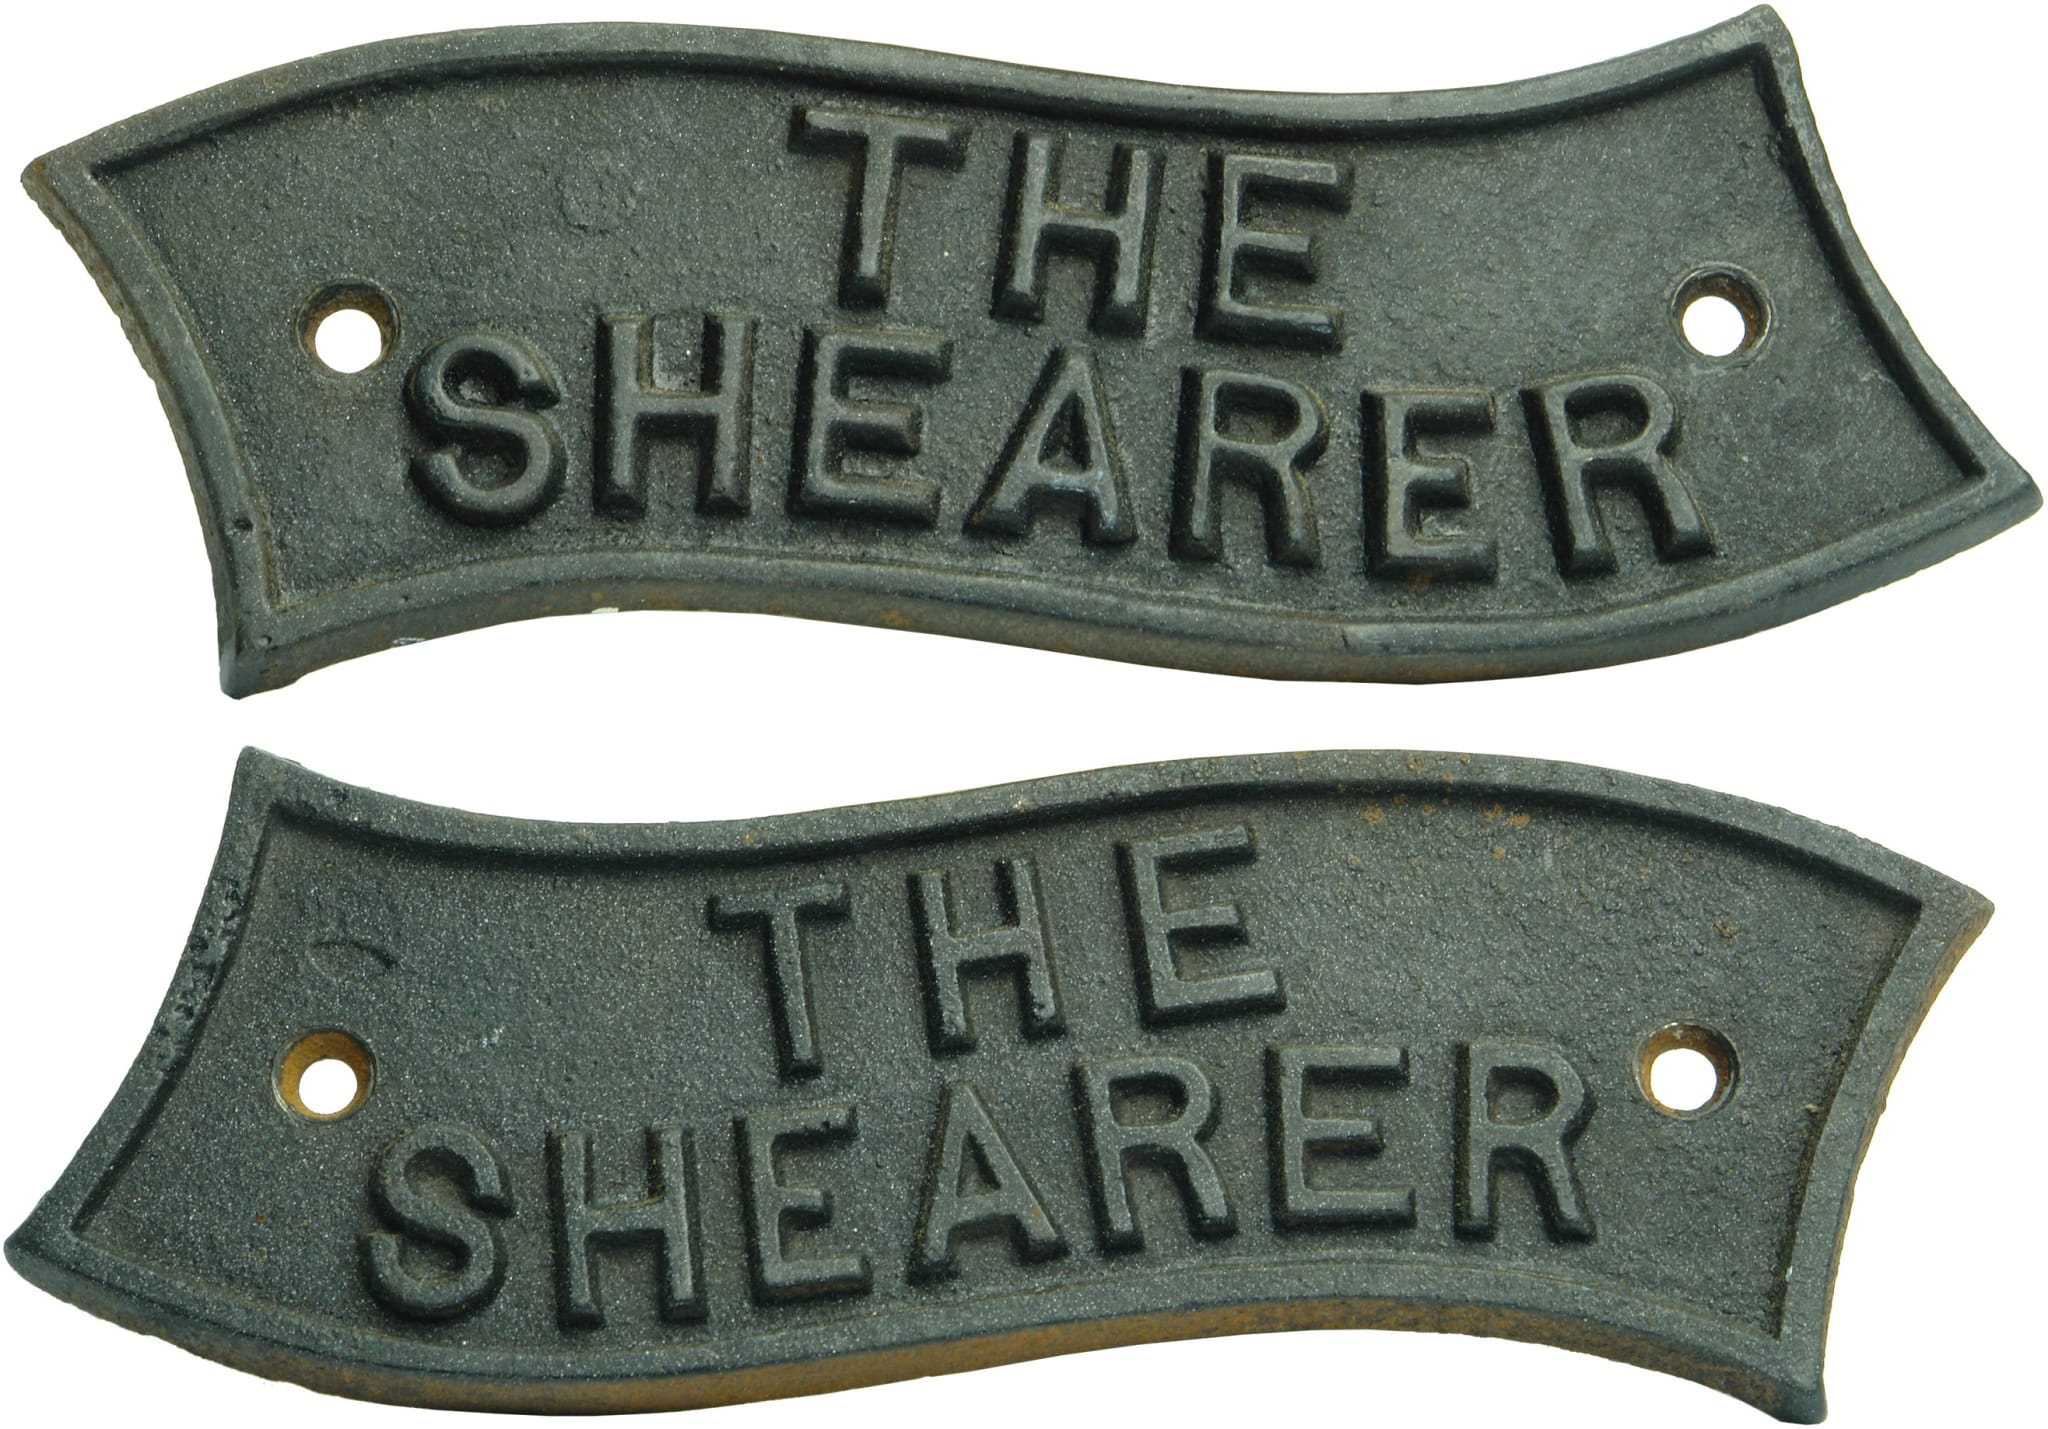 The Shearer Cast Iton Metal Name Plates